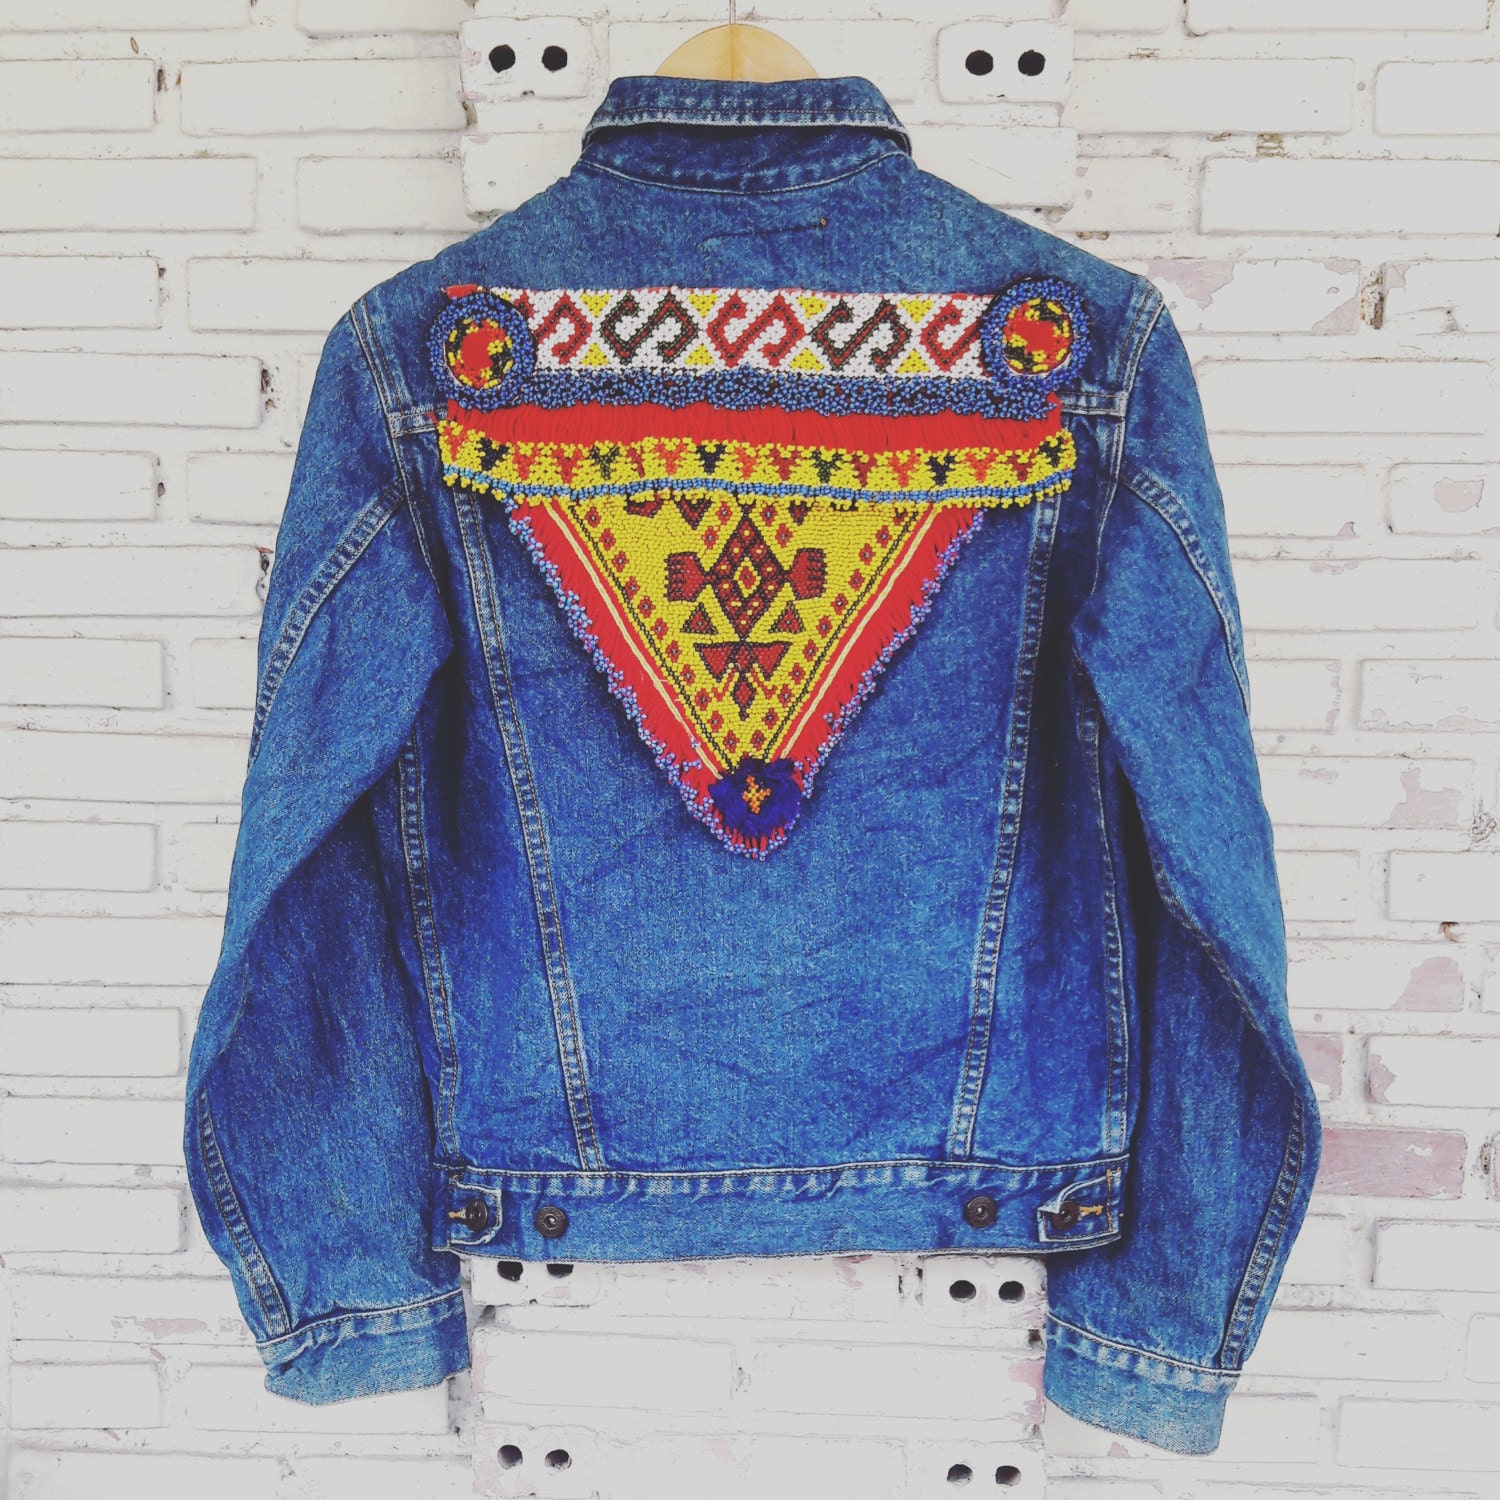 Tribal Denim Jacket / Hand-Reworked Vintage Jean Jacket with